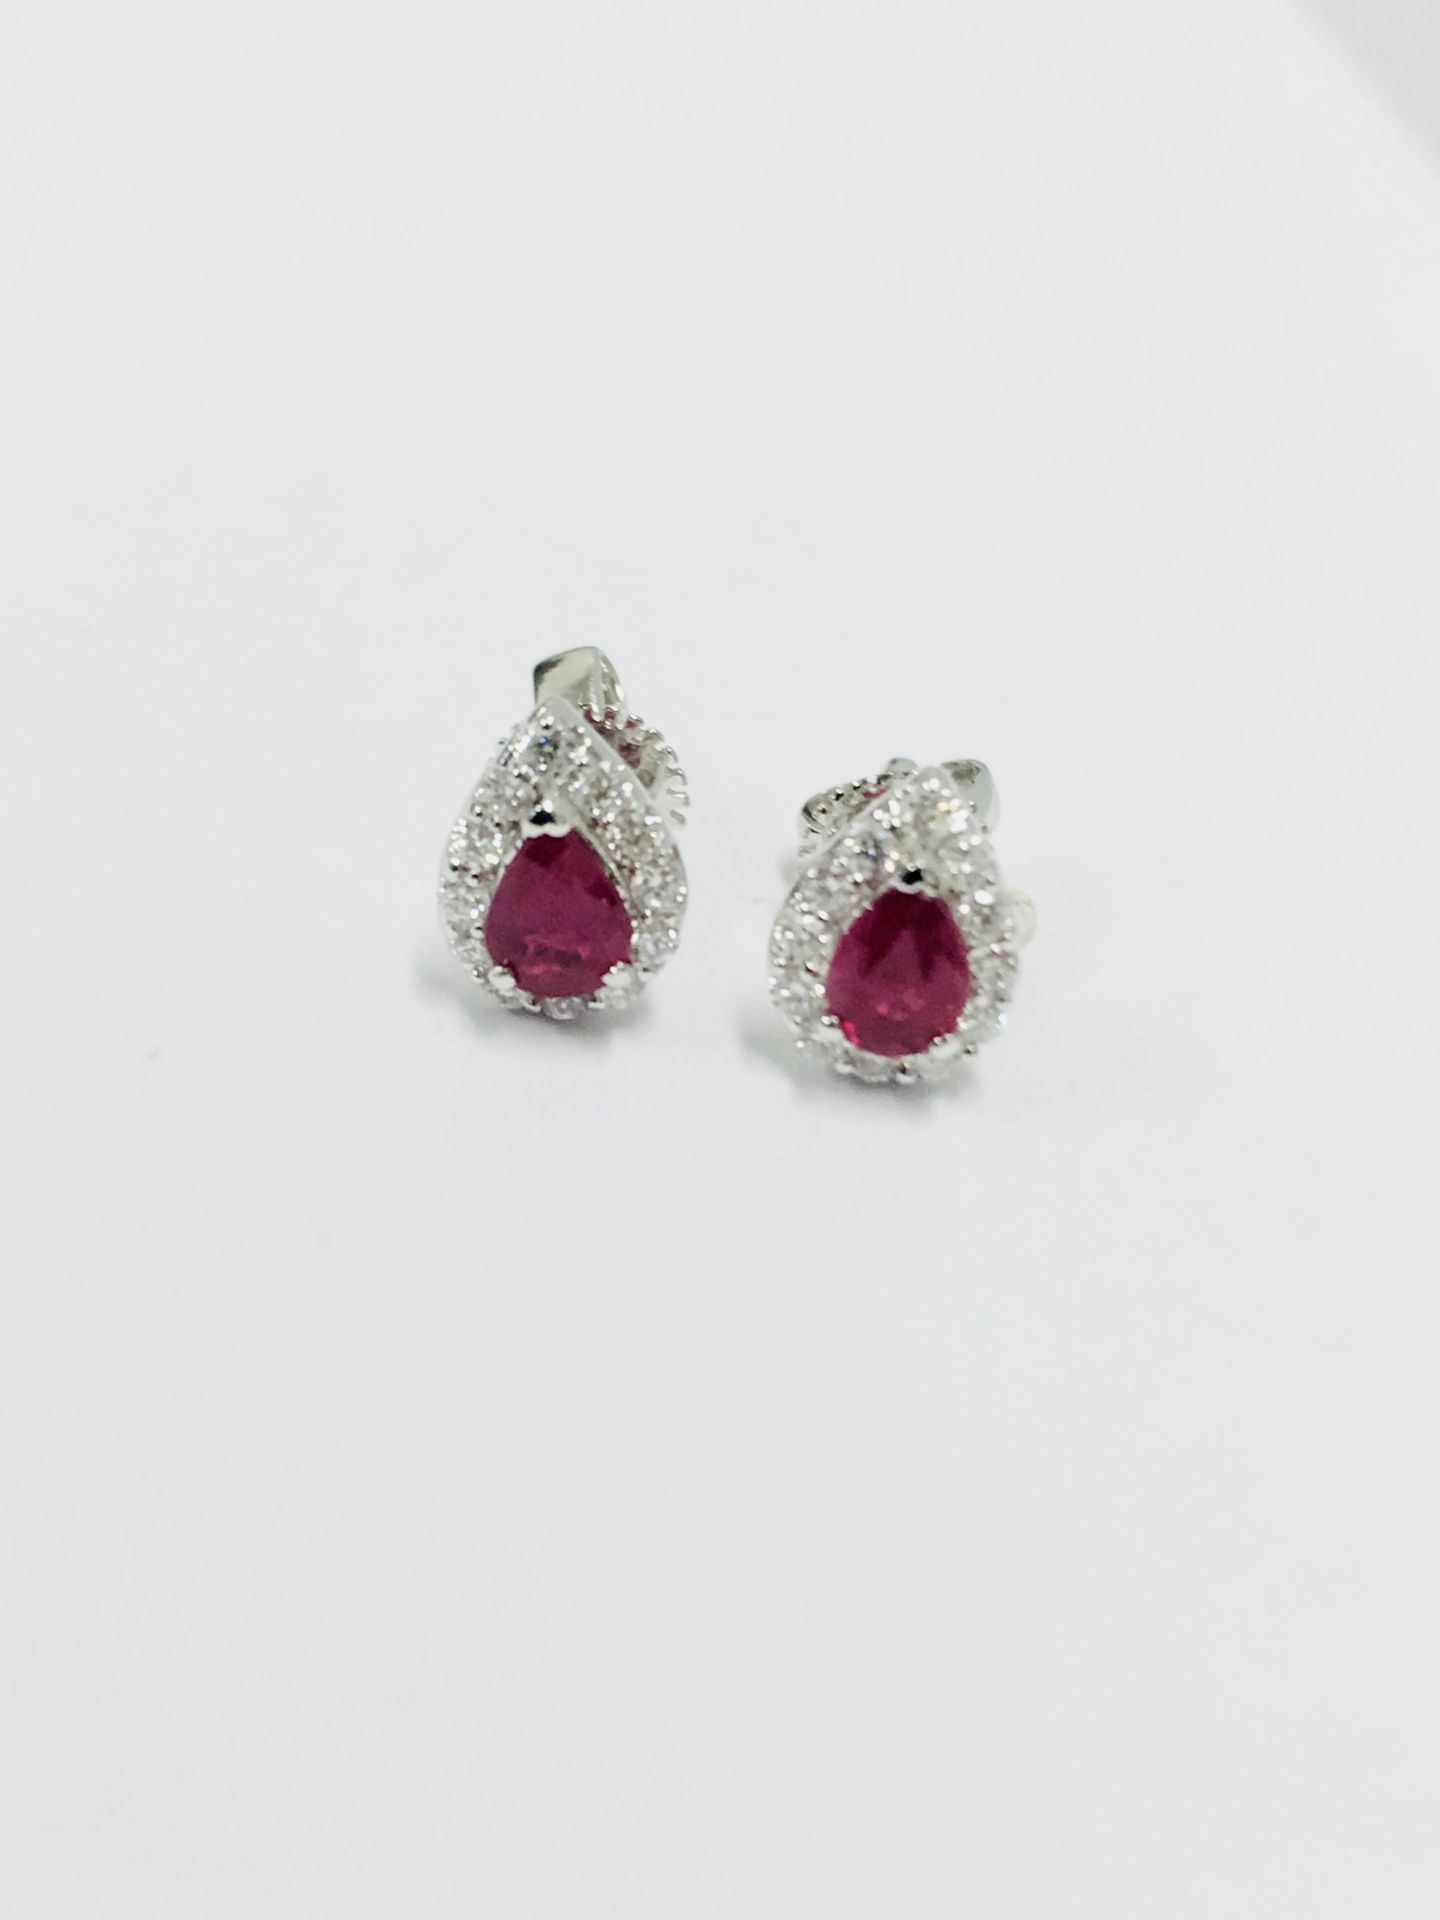 18ct white gold Ruby & Diamond Earrings,Ruby 0.58ct pearshape natural,0.17ct diamond brilliant cut g